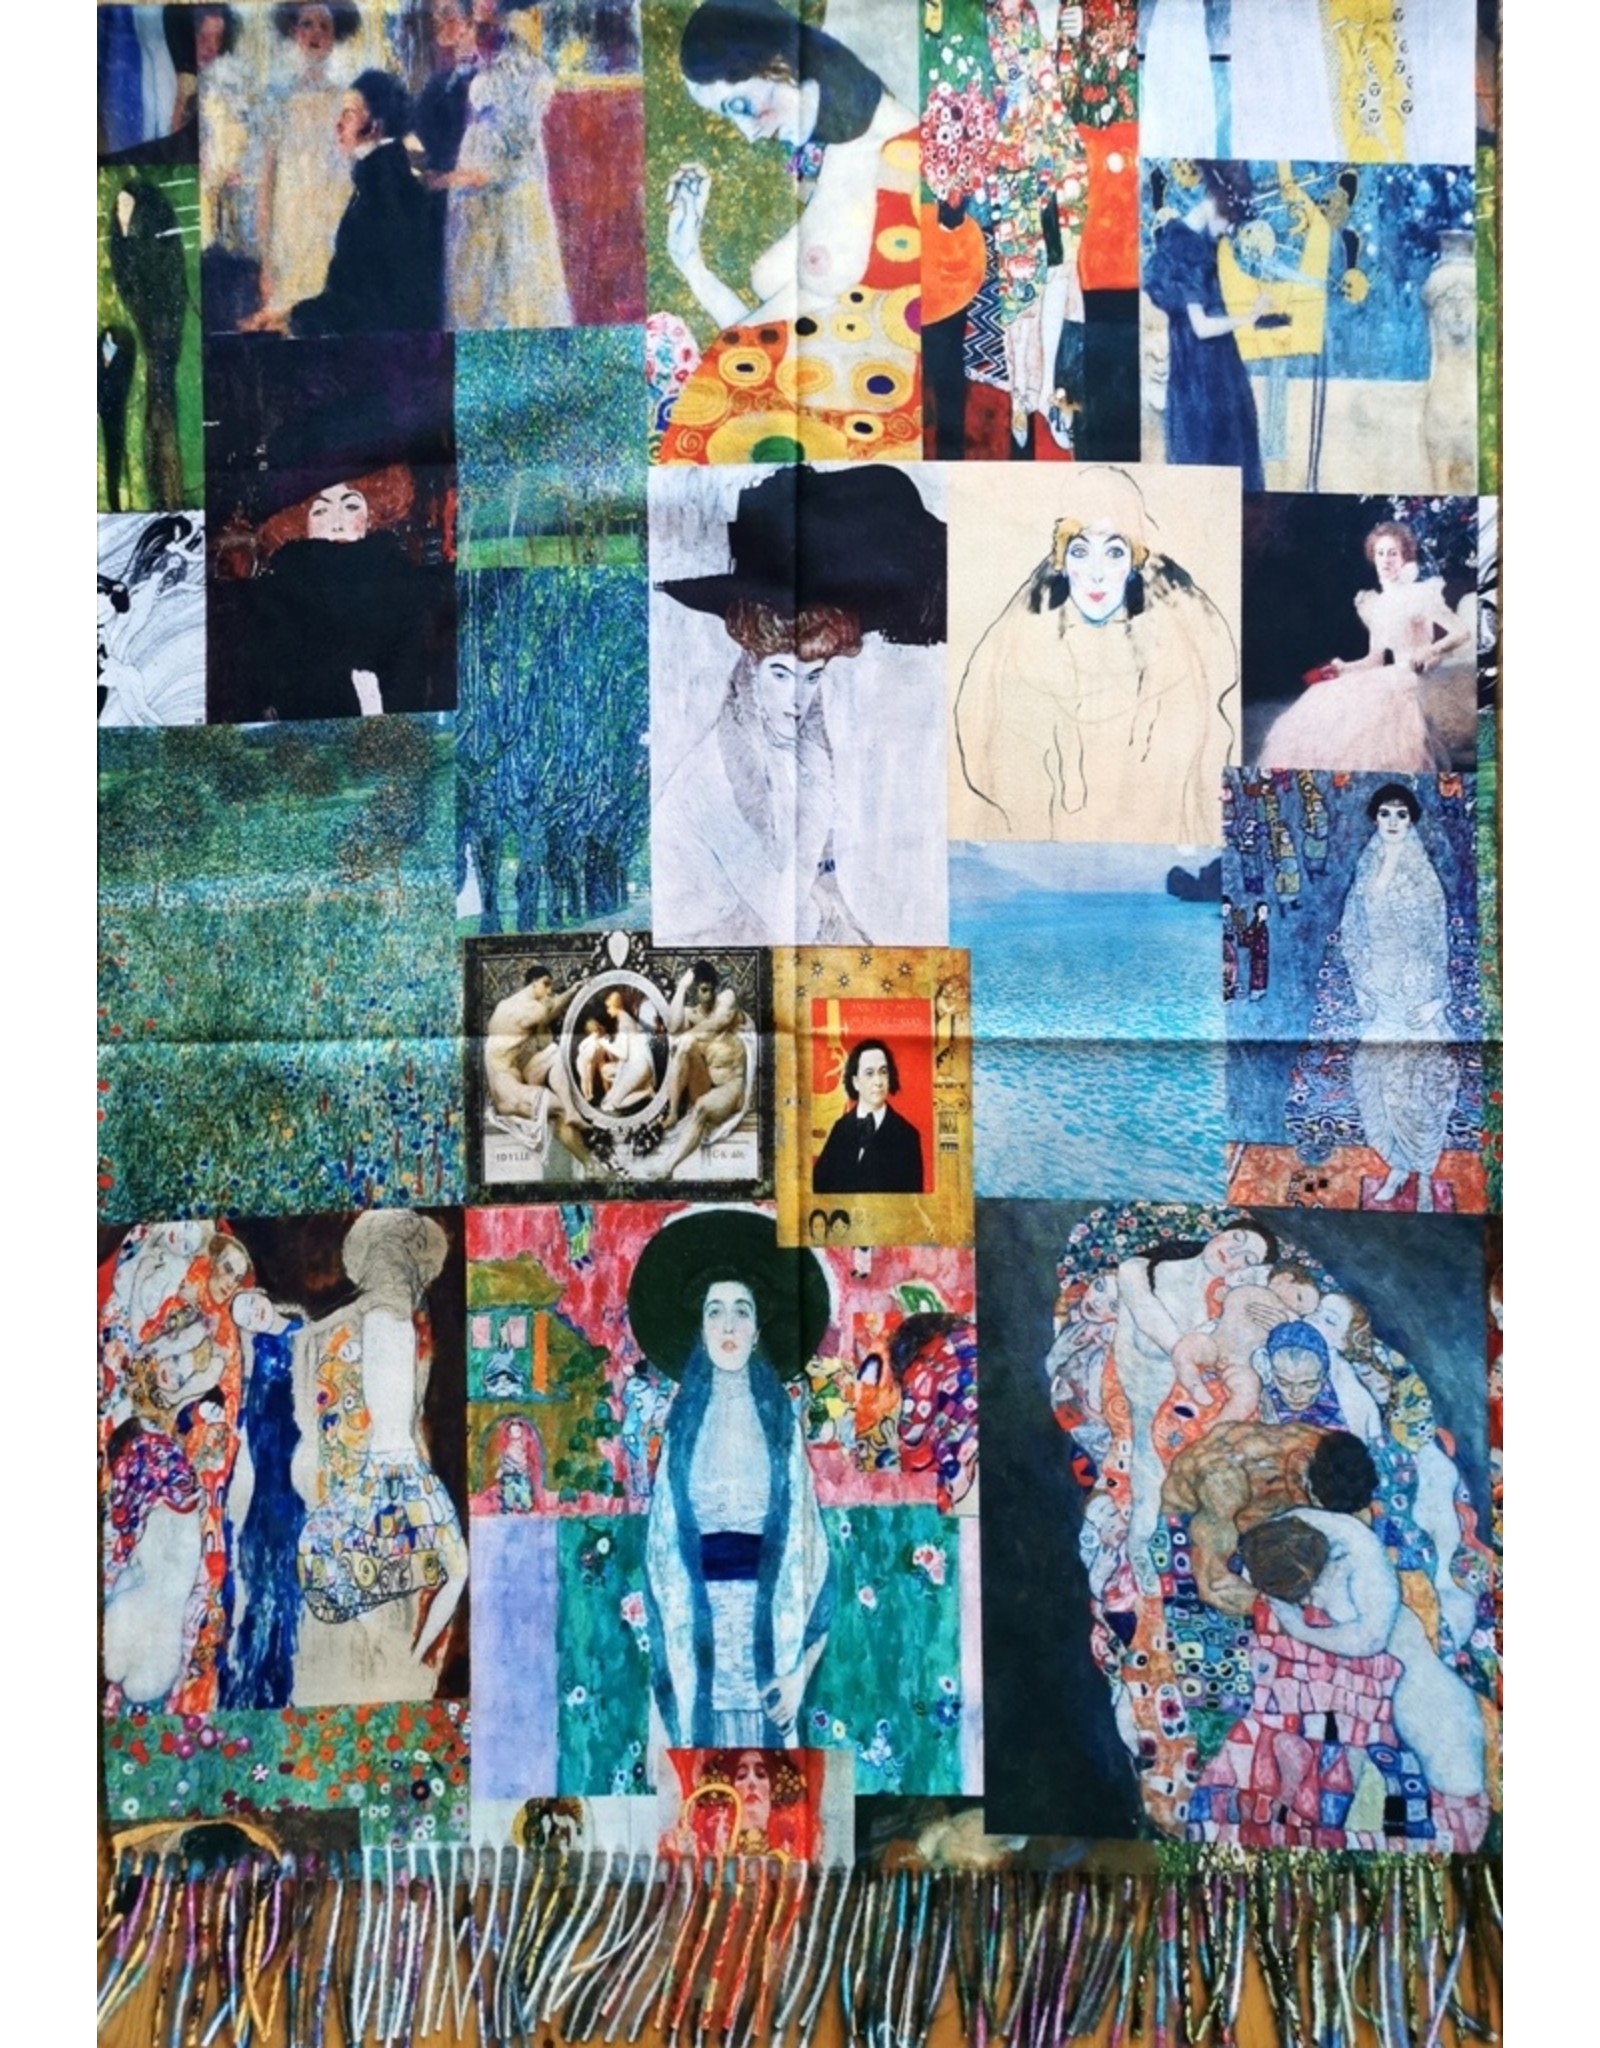 Miscellaneous - Shawl-Wrap Gustav Klimt Collage - double sided